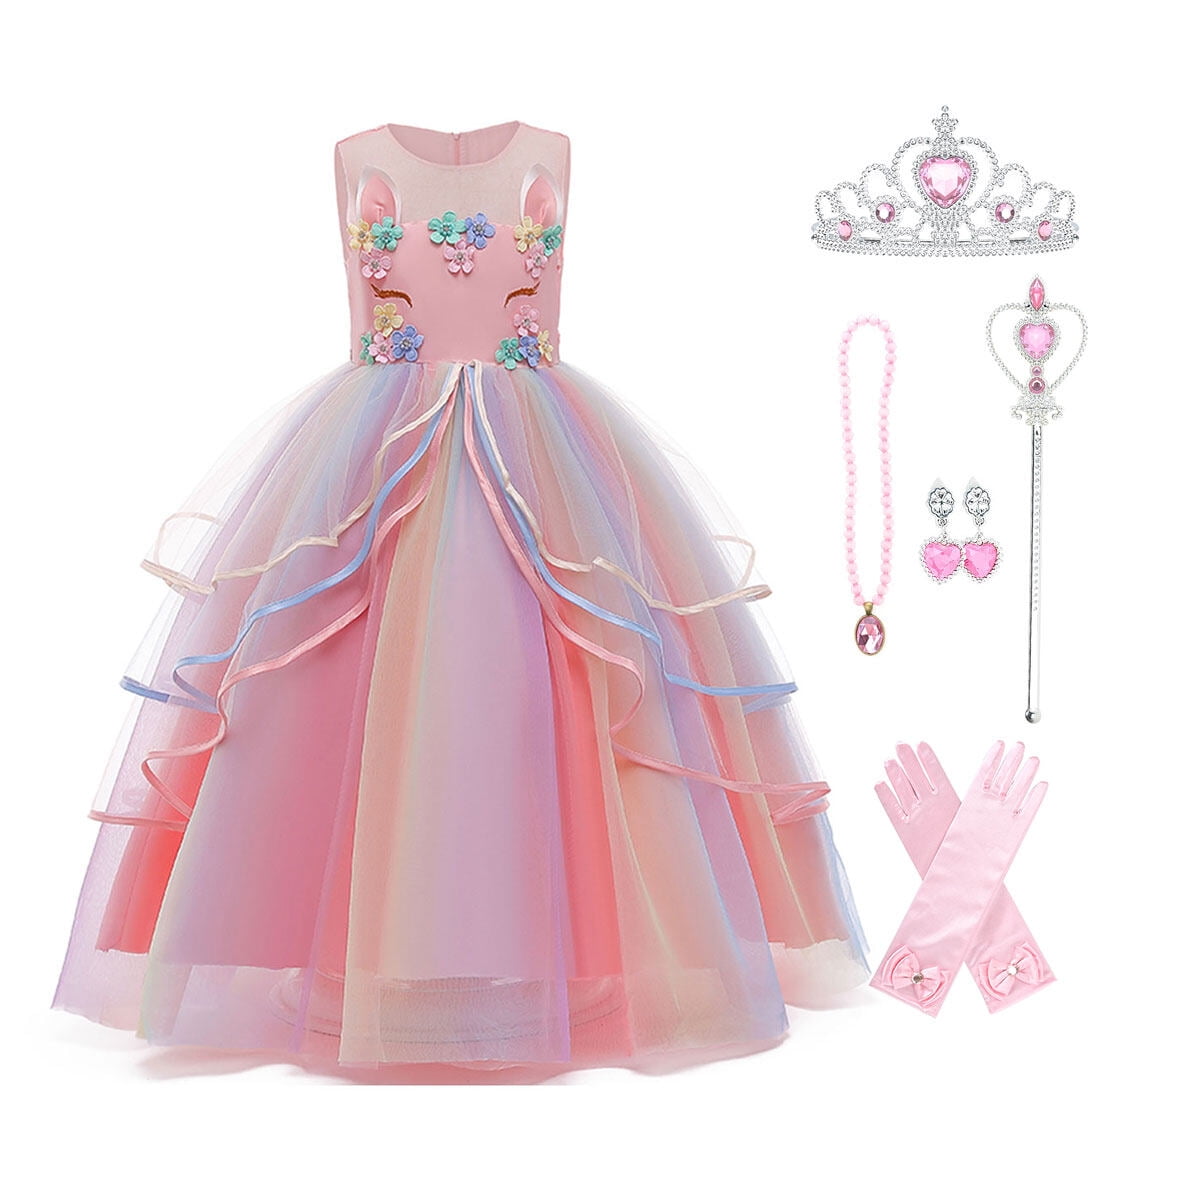 Best Princess Dress for Toddlers | Glitter Free Princess Dresses